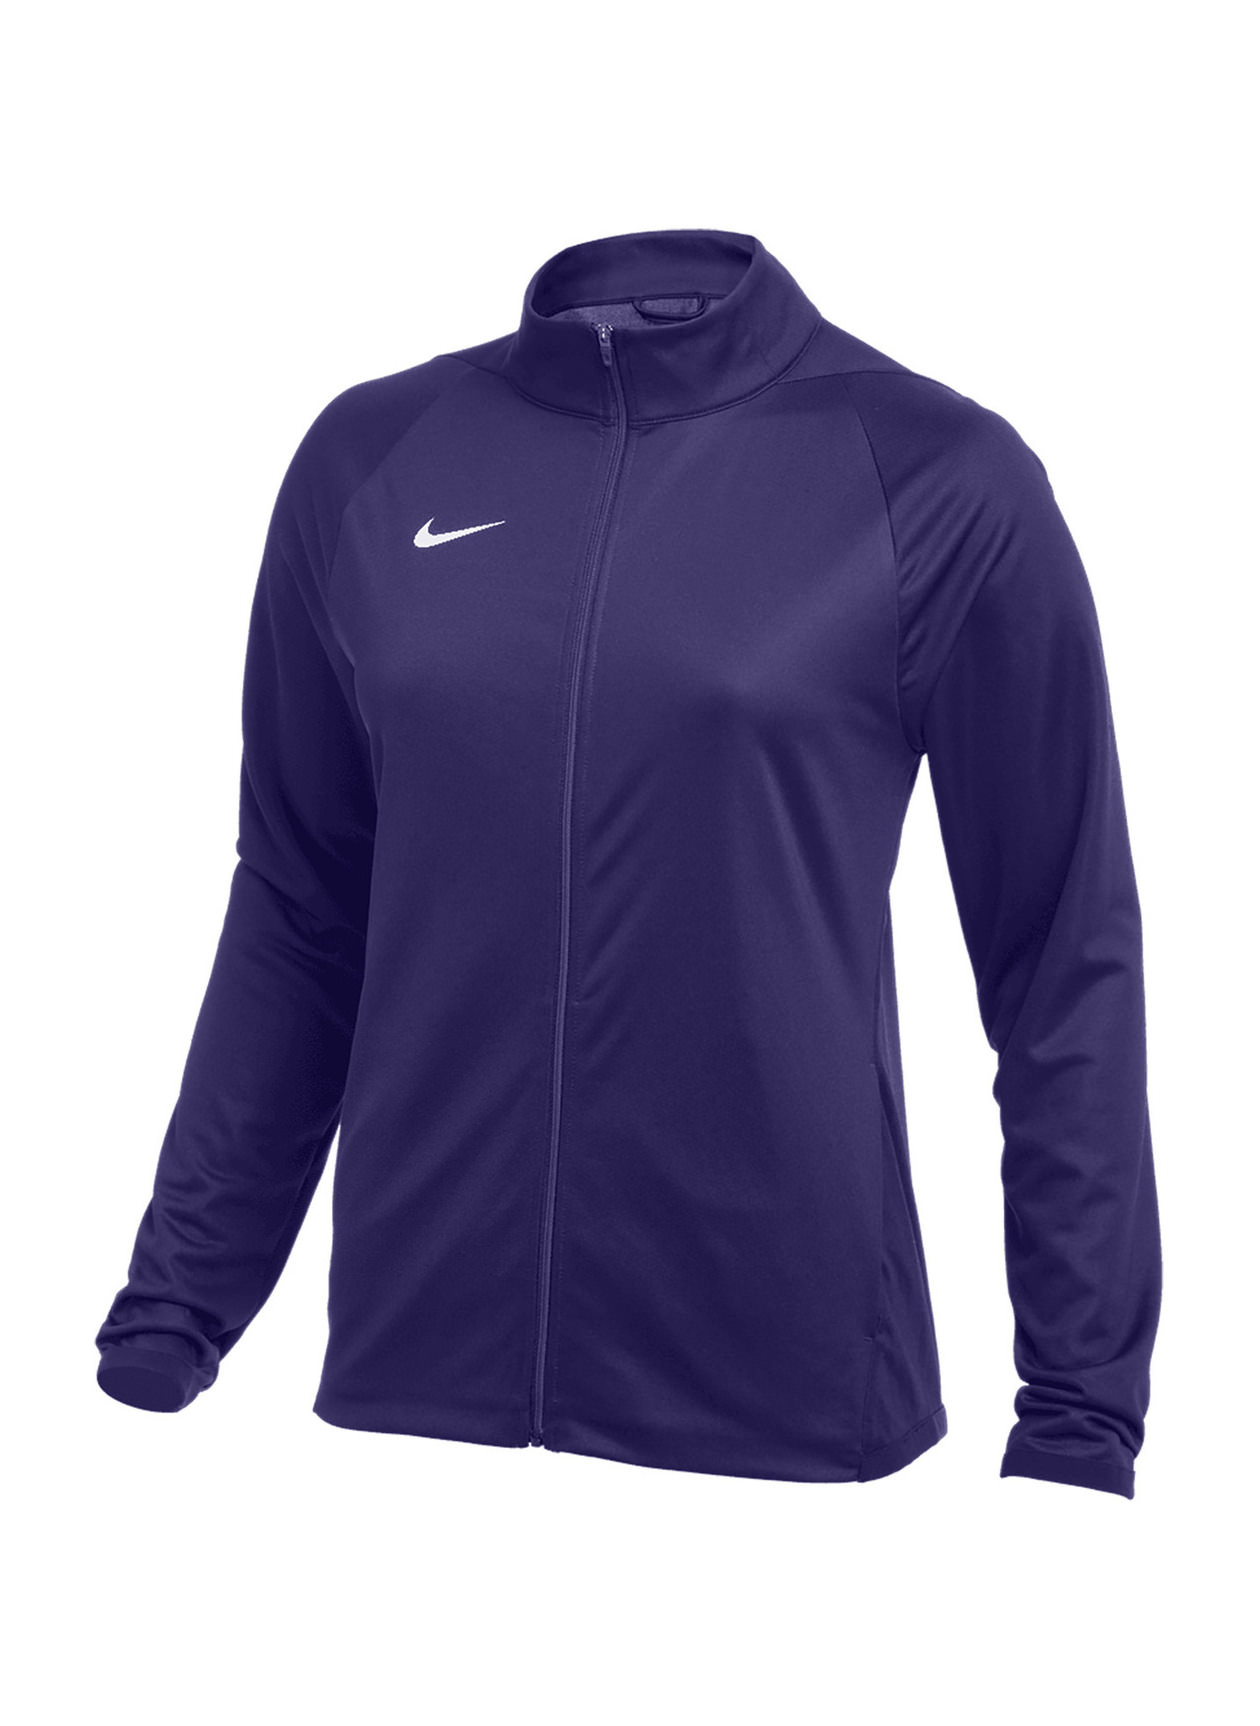 Nike Women's Team Purple / White Epic Knit Jacket 2.0